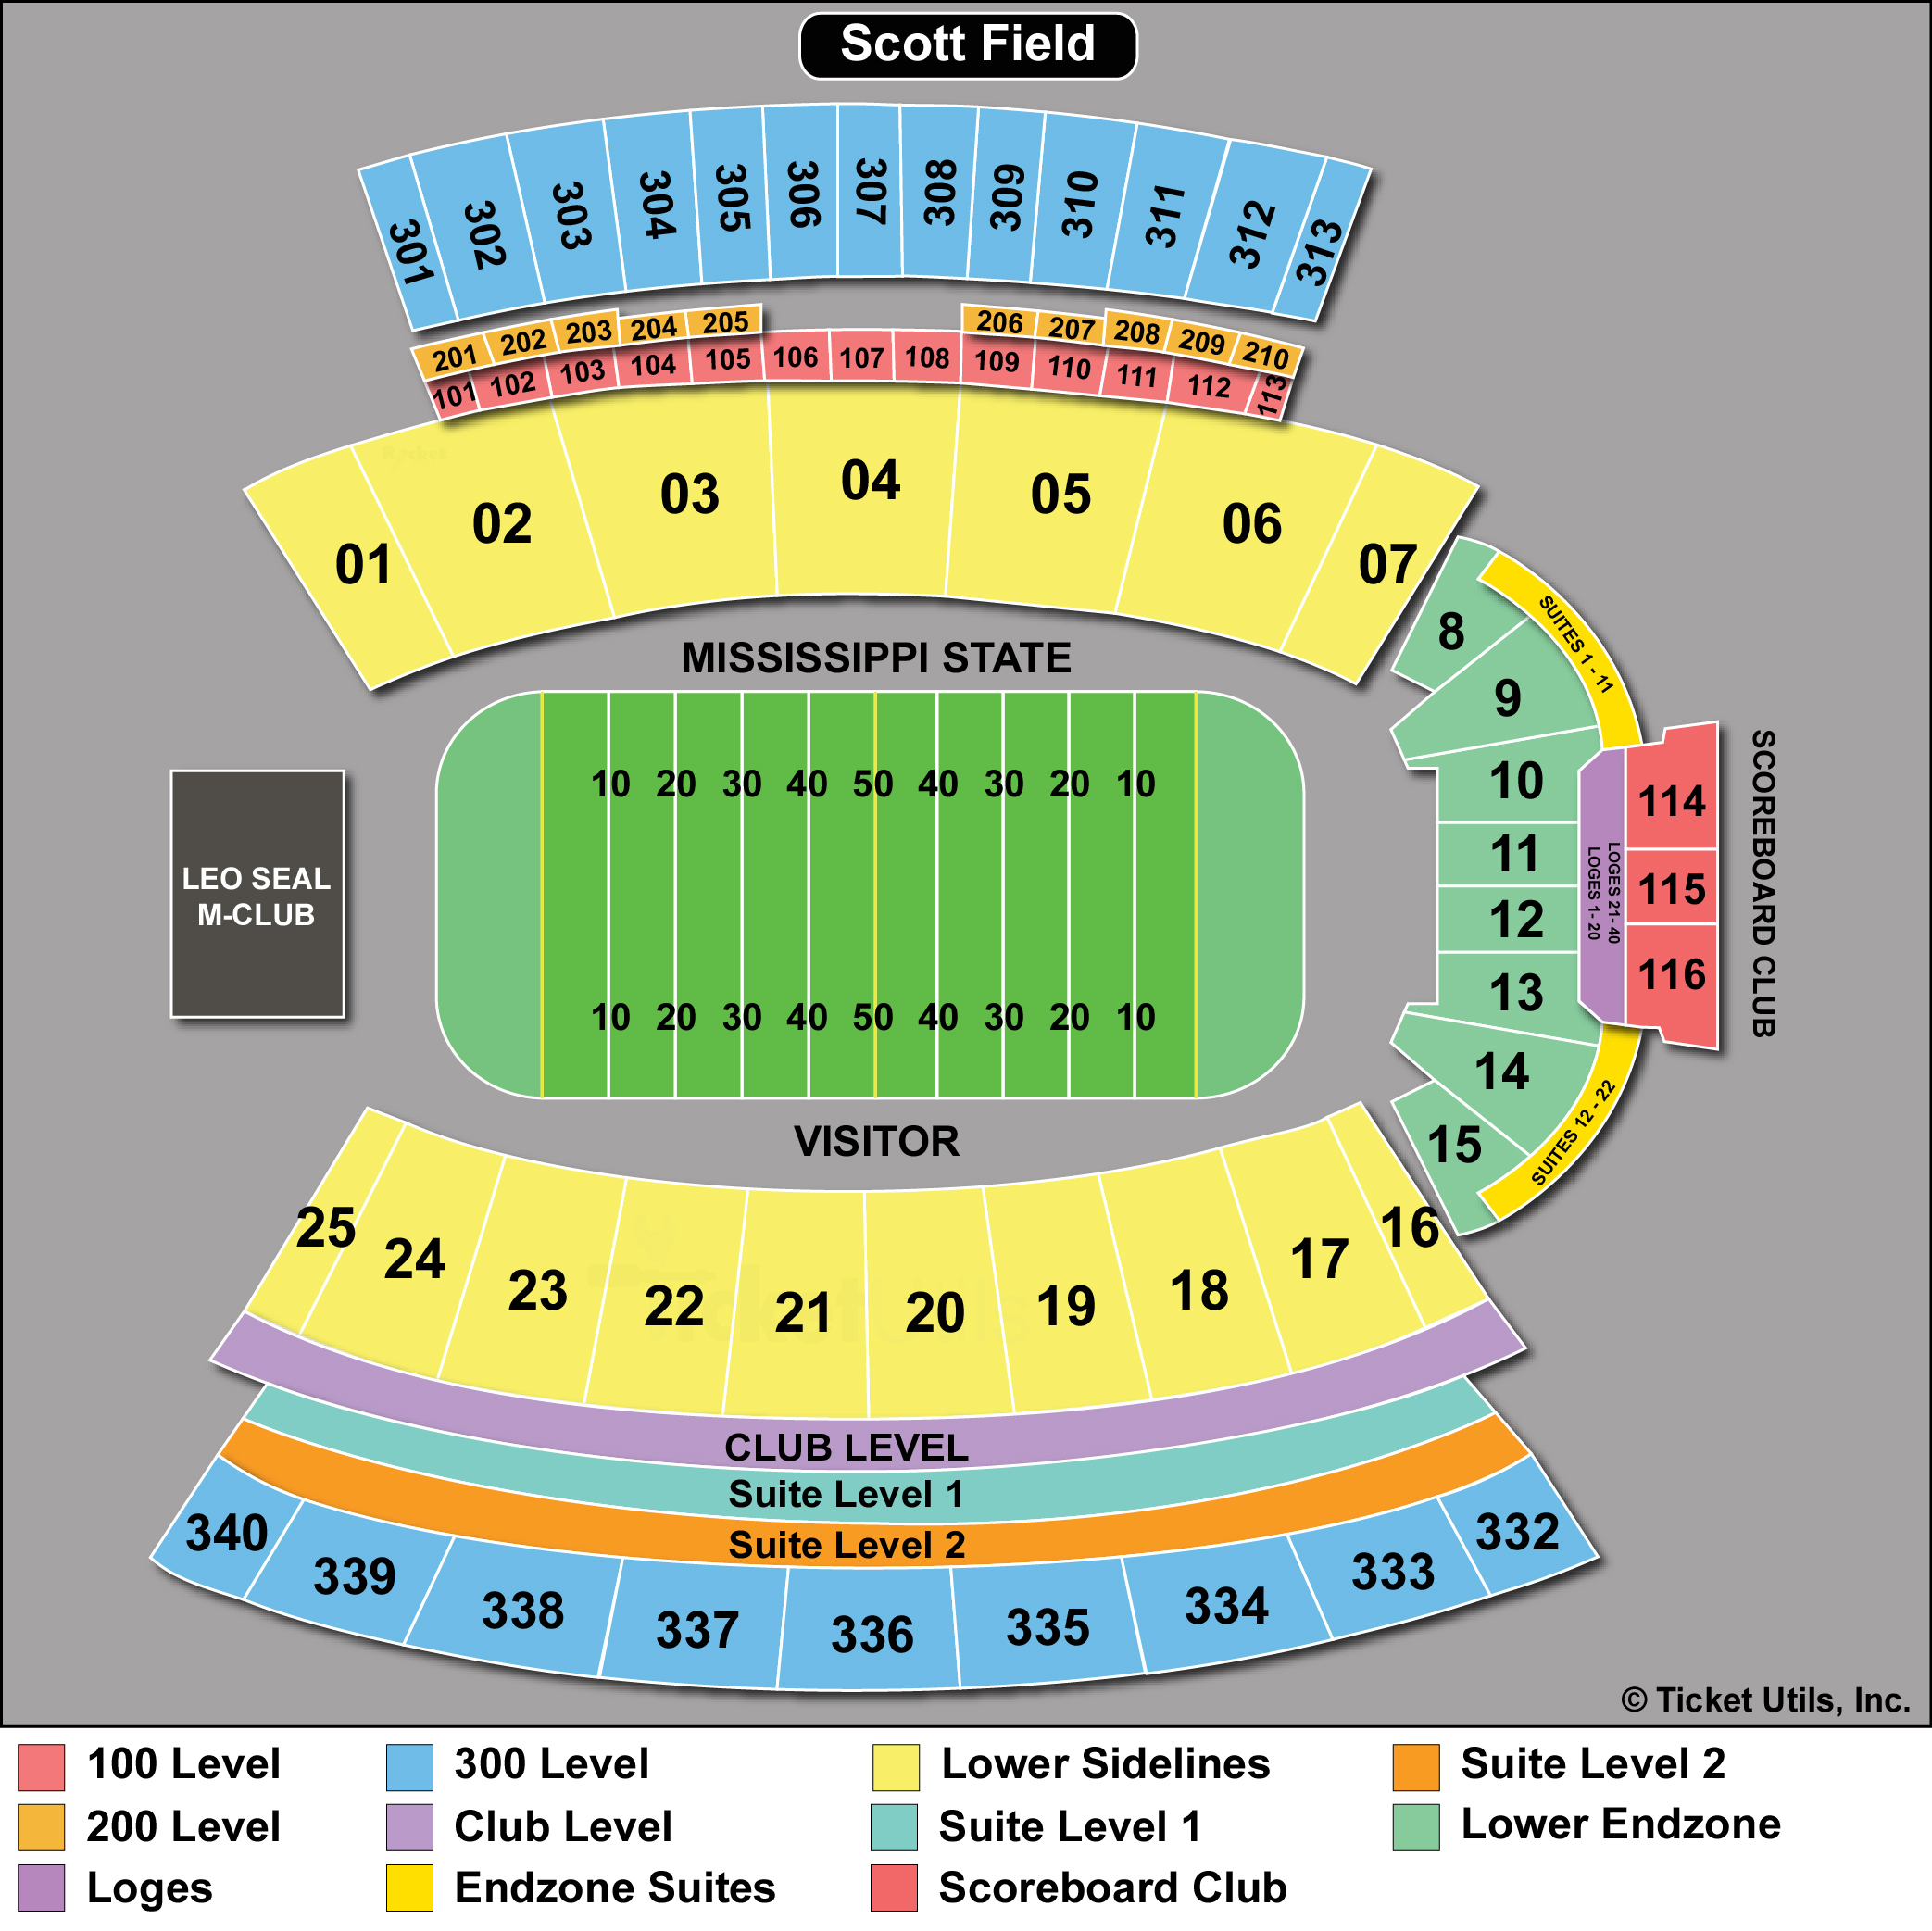 Alabama Stadium Seating Chart